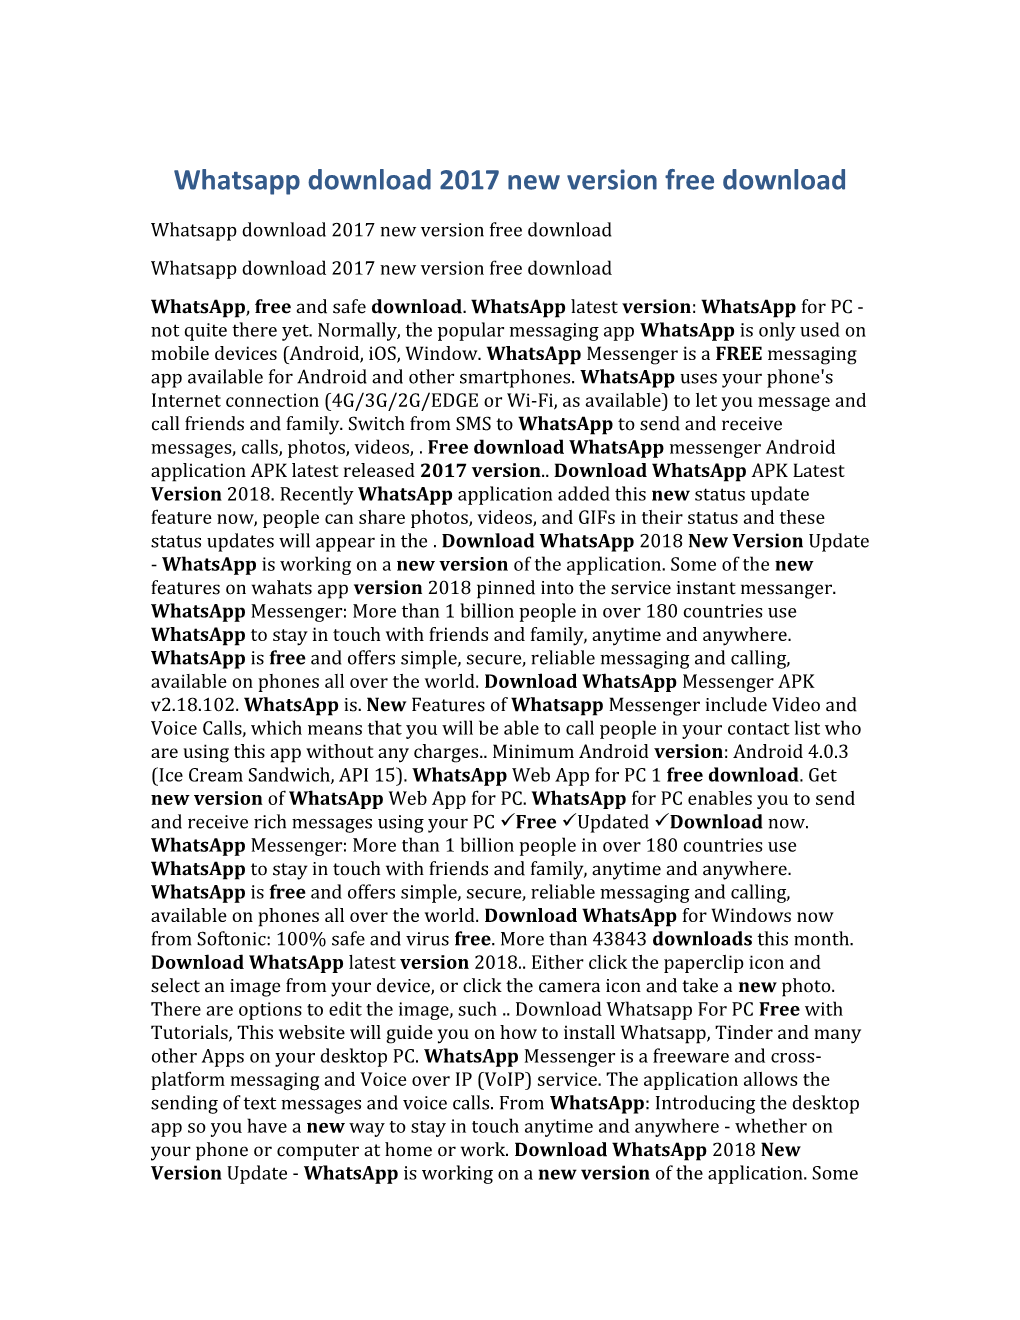 Whatsapp Download 2017 New Version Free Download